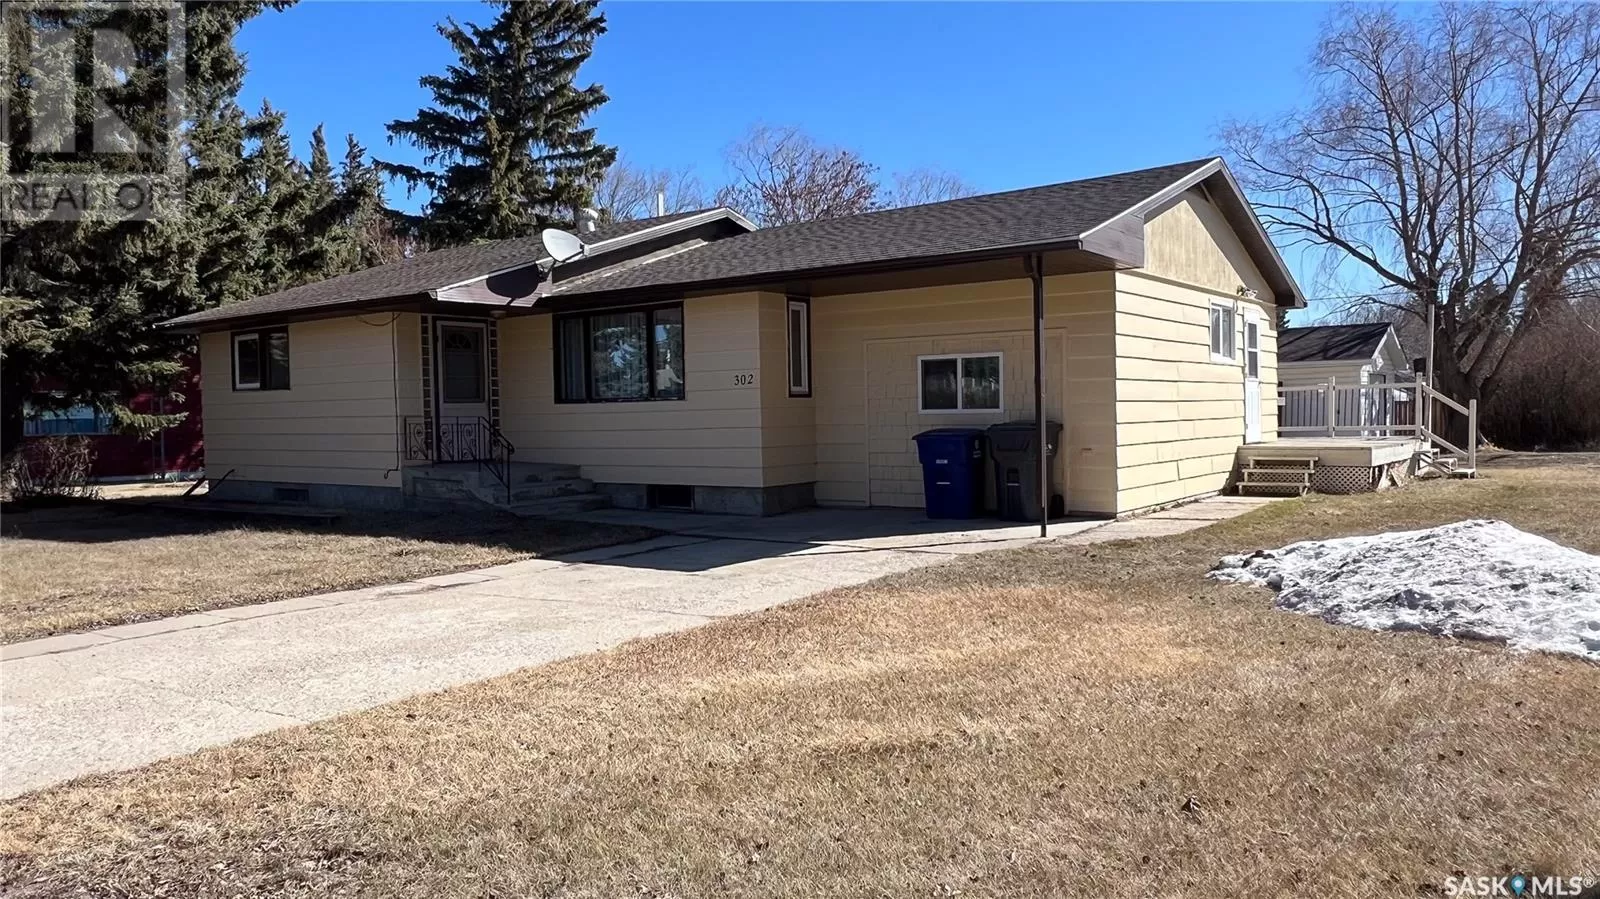 House for rent: 302 Broad Street, Cut Knife, Saskatchewan S0M 0N0